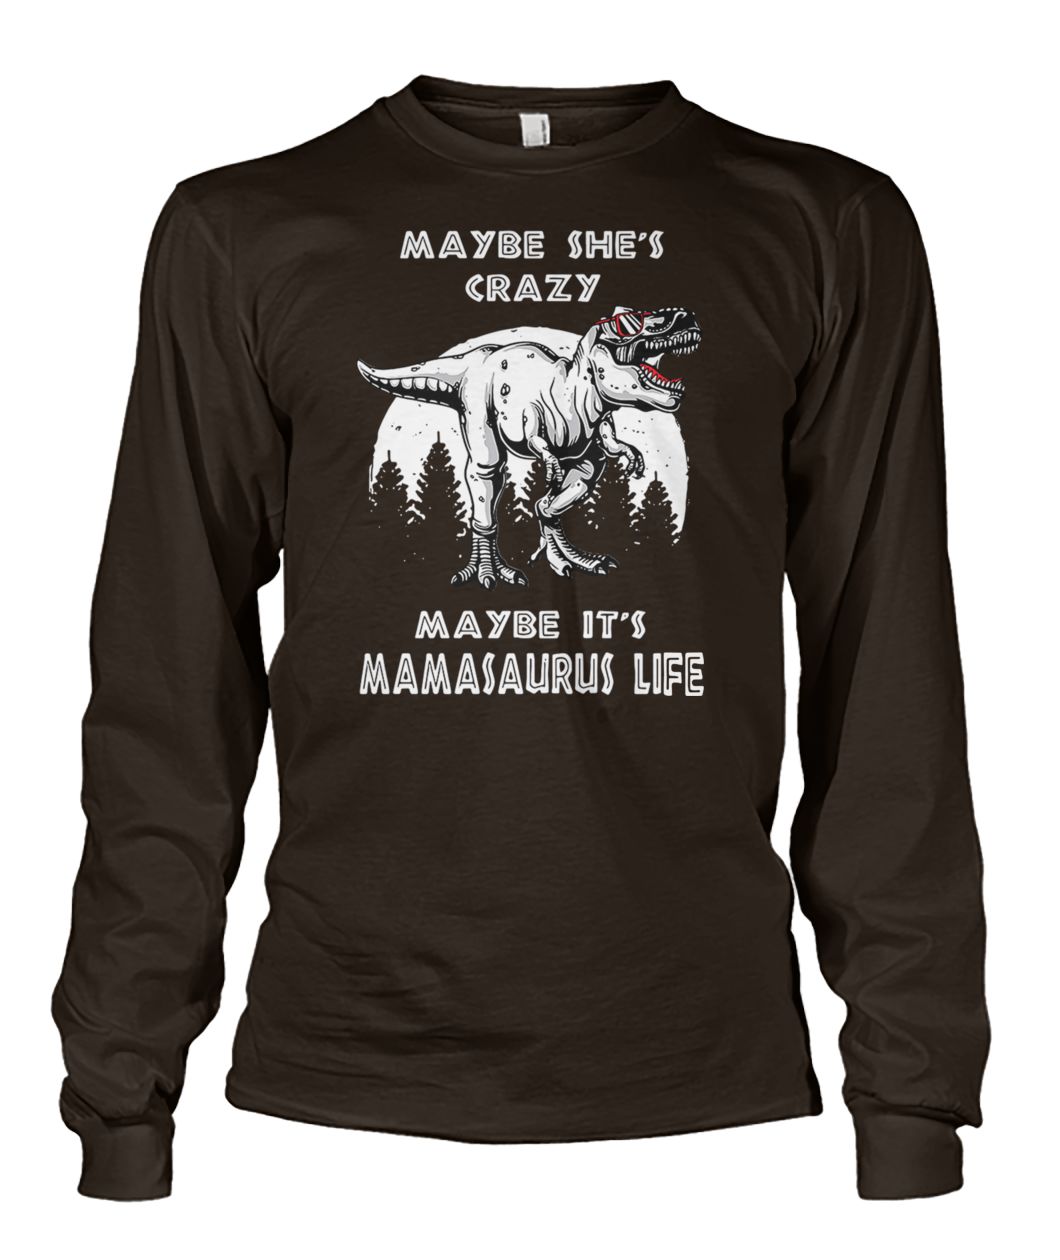 Maybe she's crazy maybe it's mamasaurus life unisex long sleeve